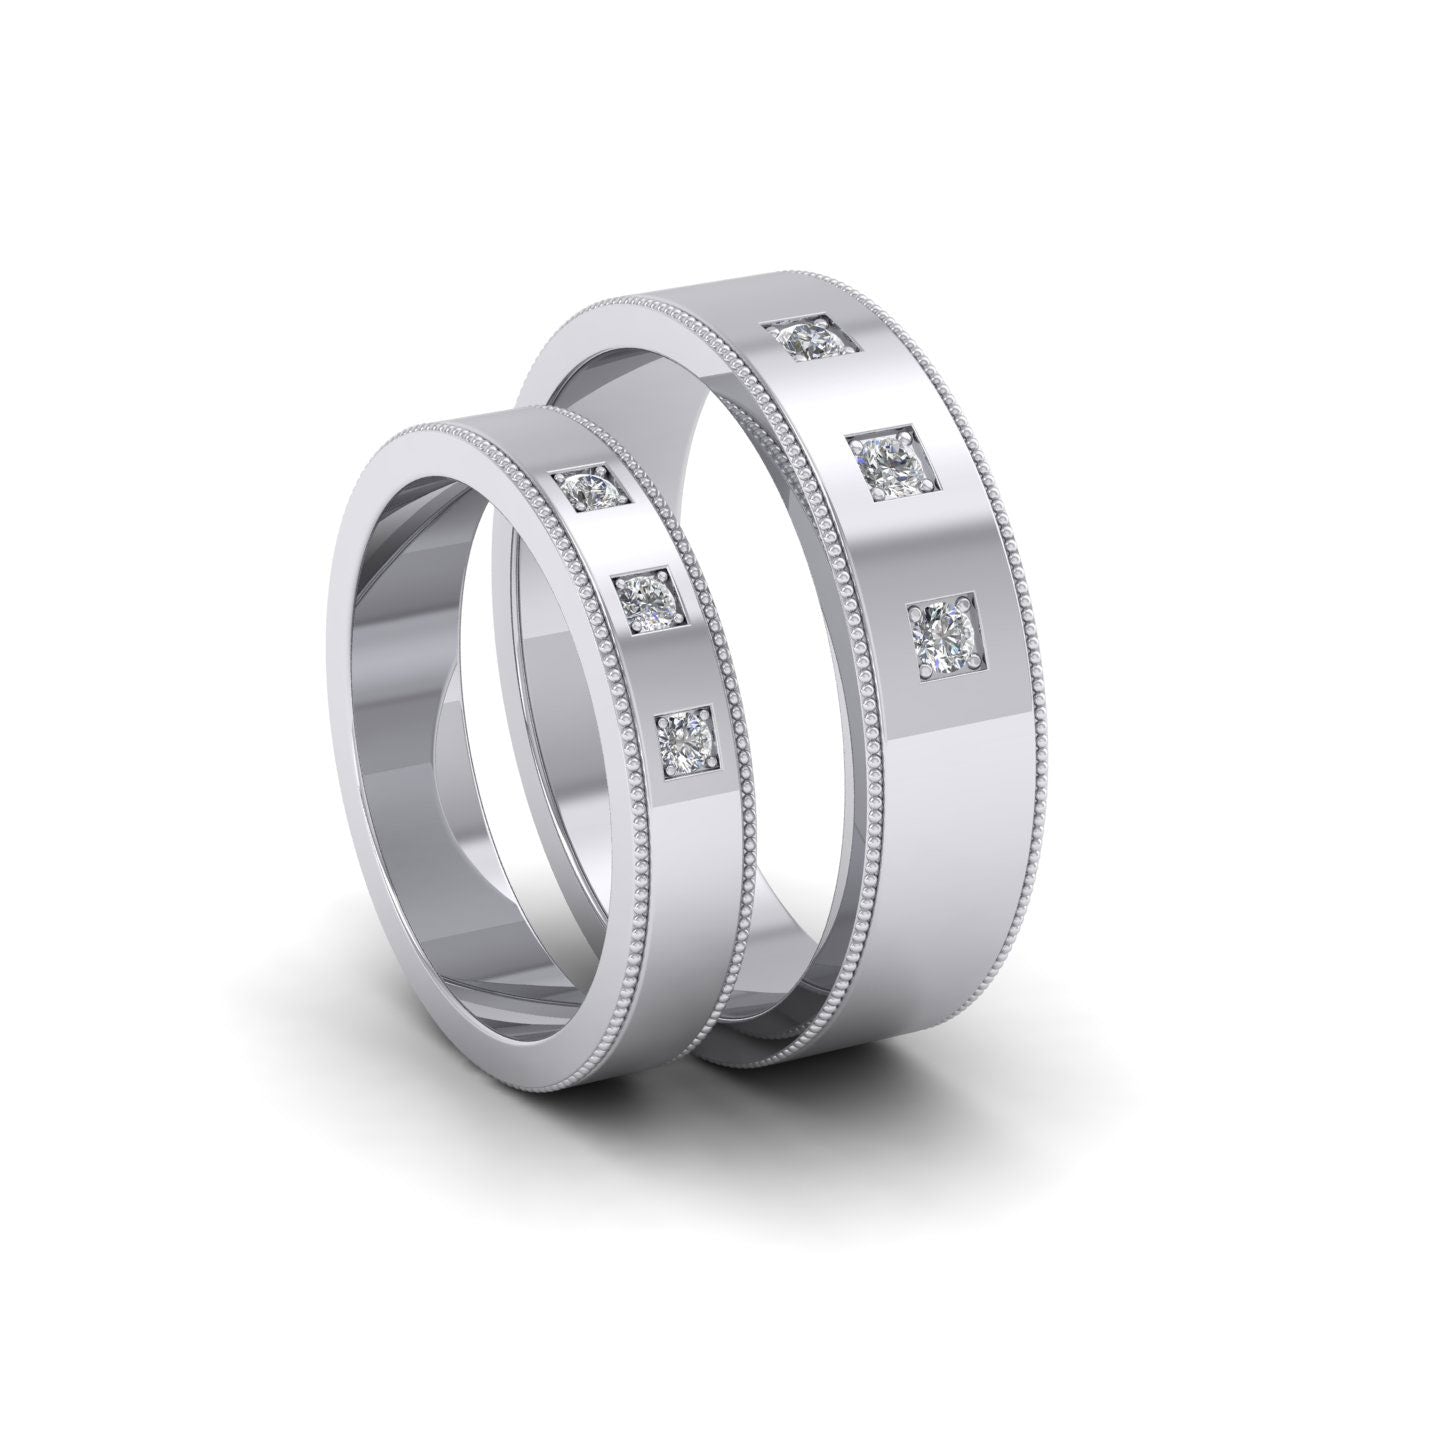 Three Diamonds With Square Setting 950 Platinum 6mm Wedding Ring With Millgrain Edge